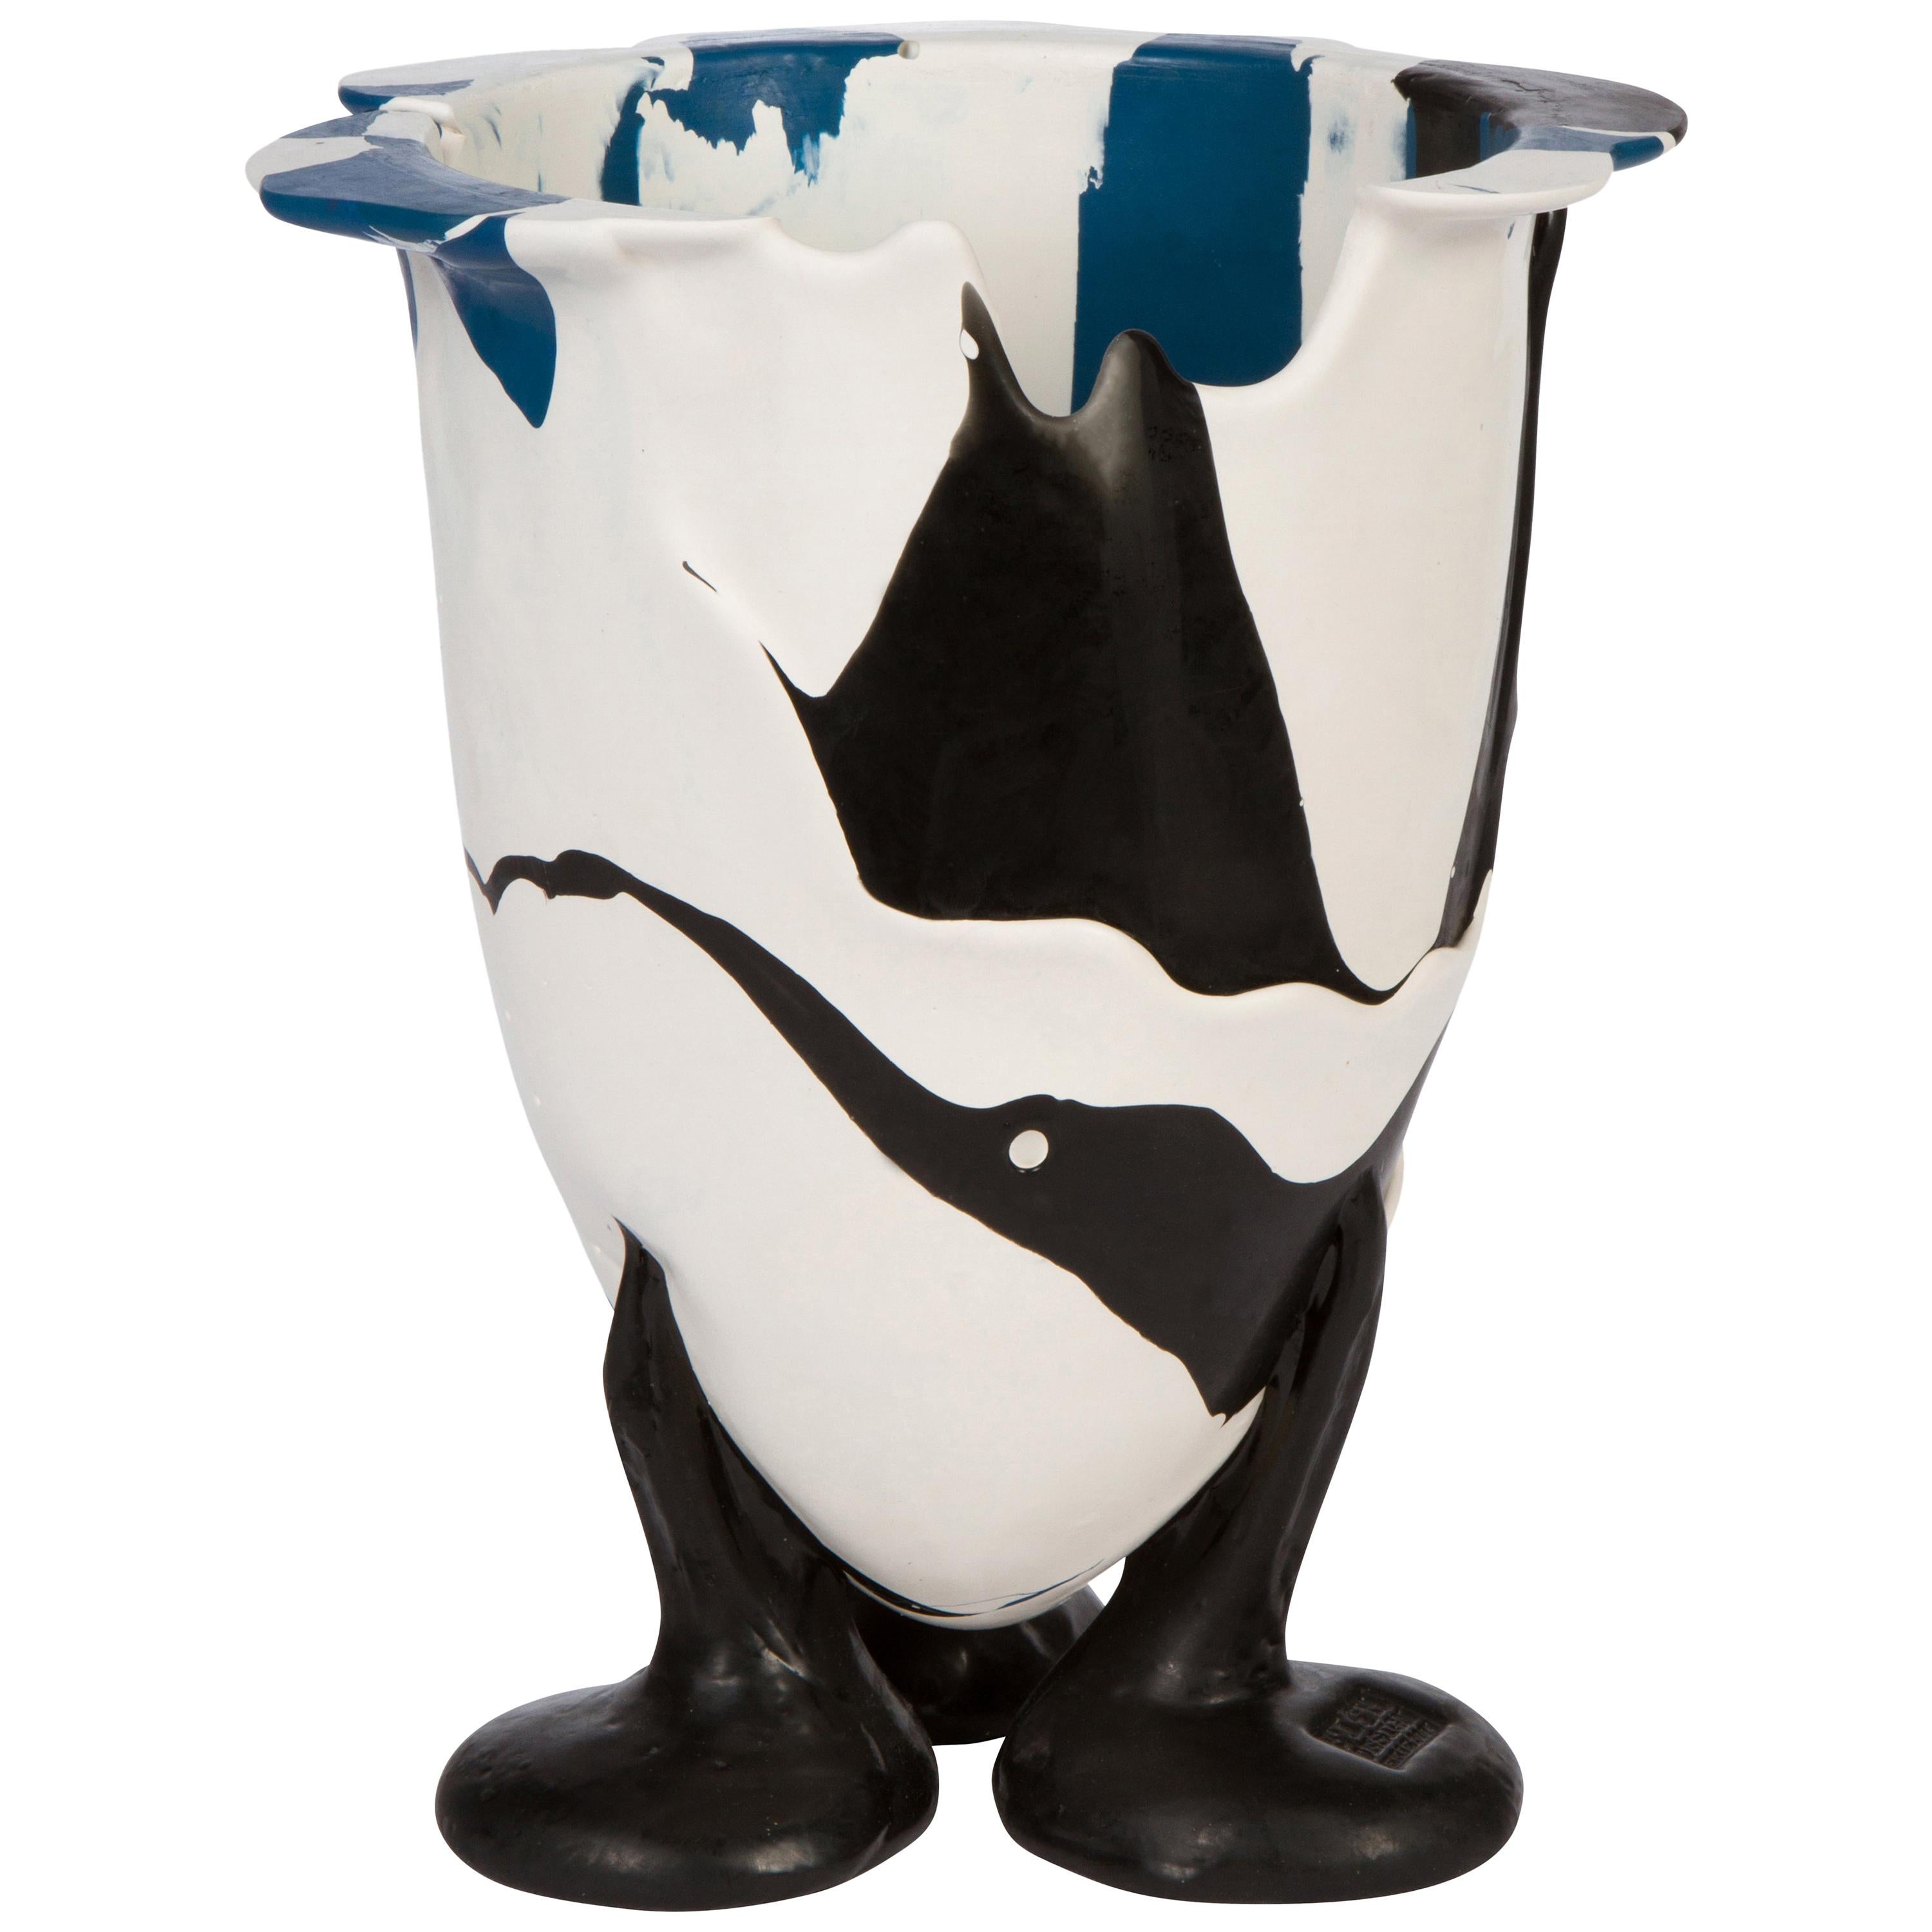 Cast Resin Vase by Gaetano Pesce